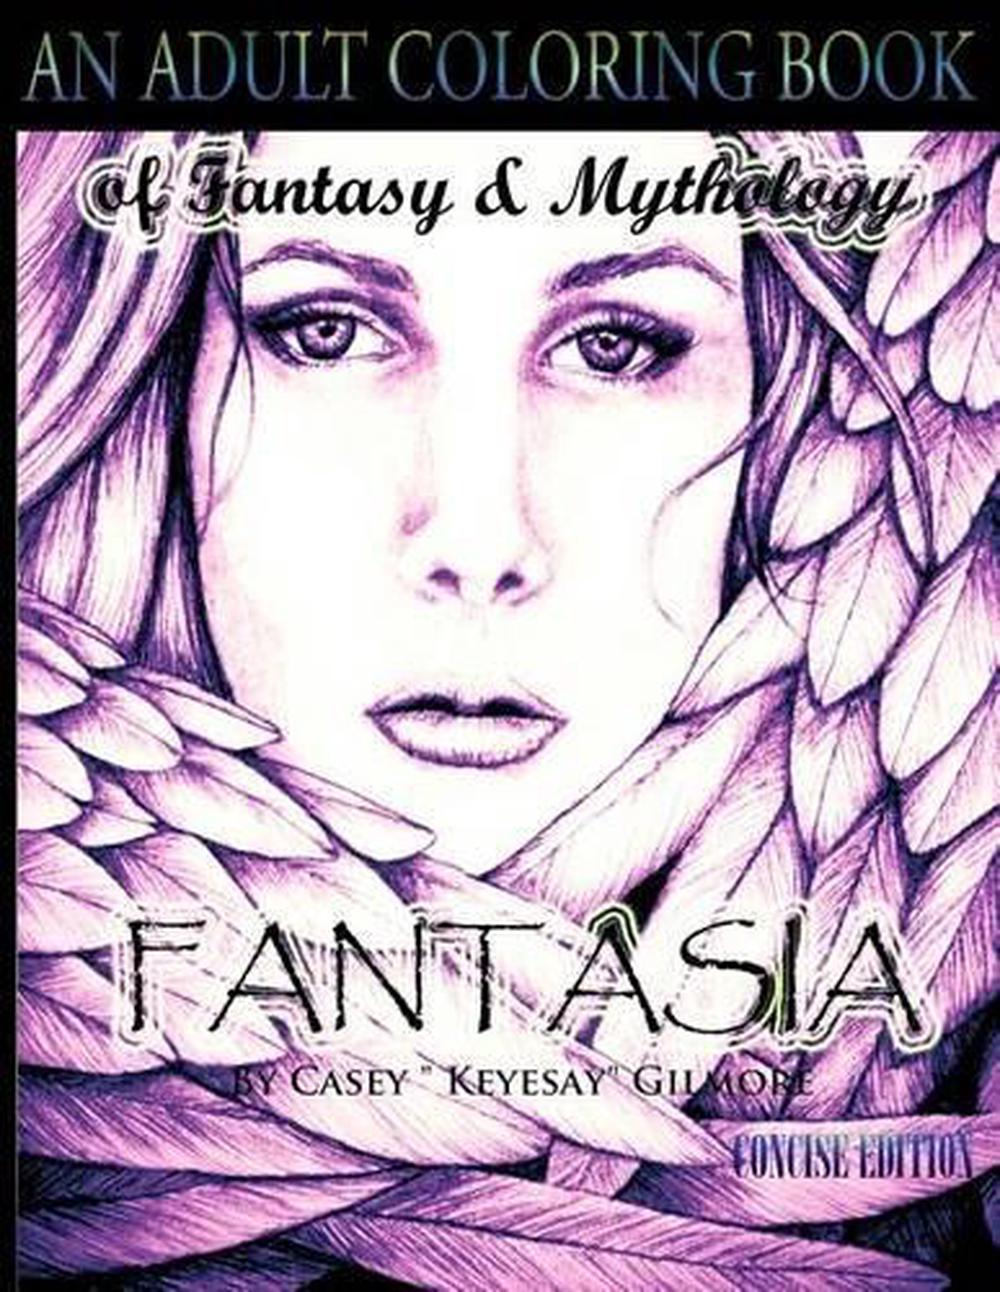 Download Fantasia An Adult Coloring Book Of Fantasy Mythology Of Fantasy And Mytholo 9781522765639 Ebay